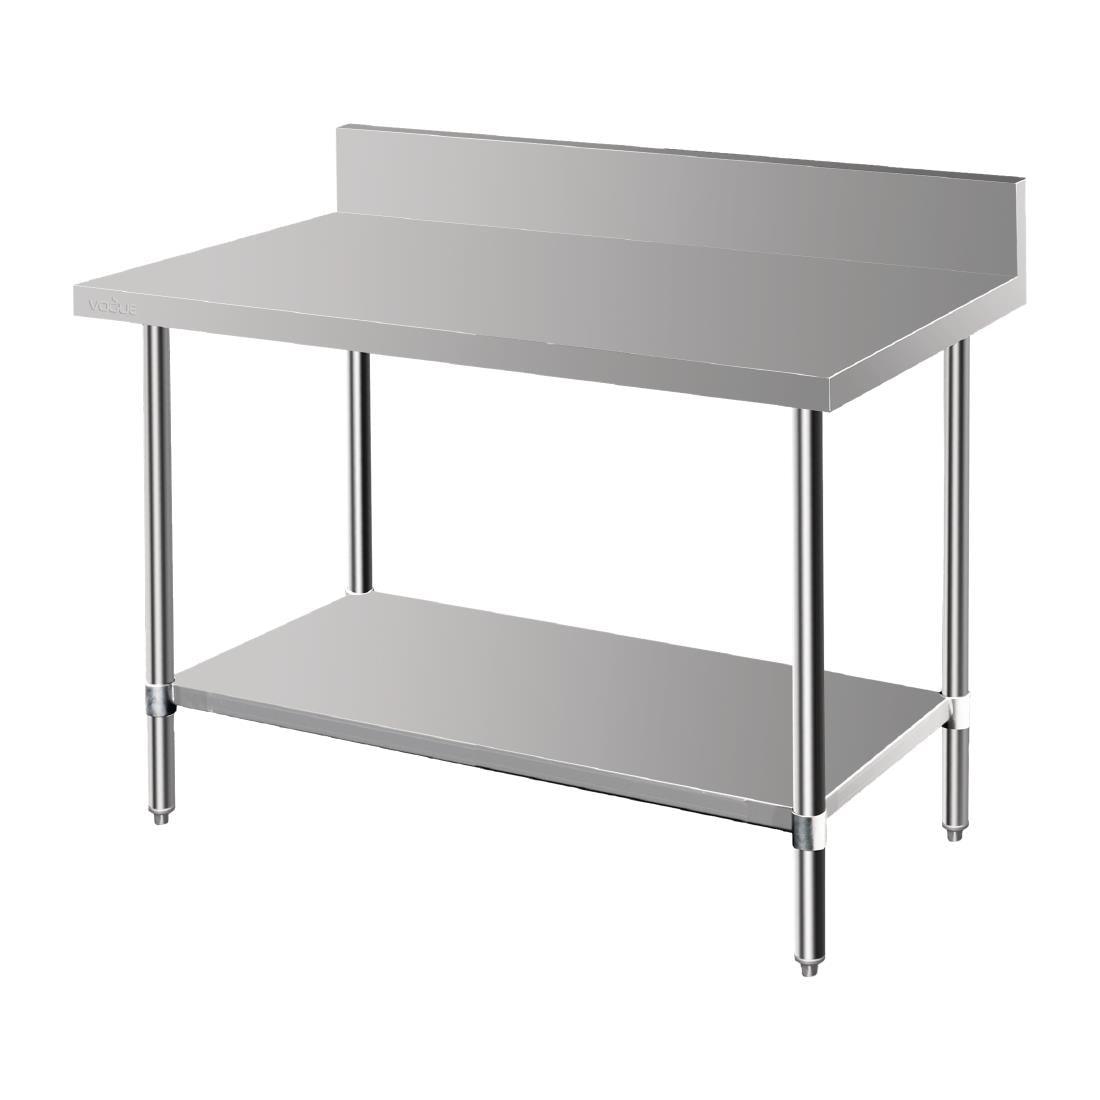 Vogue DA337 Vogue Premium 304 Stainless Steel Table with Upstand - 600x600x900mm - HospoStore